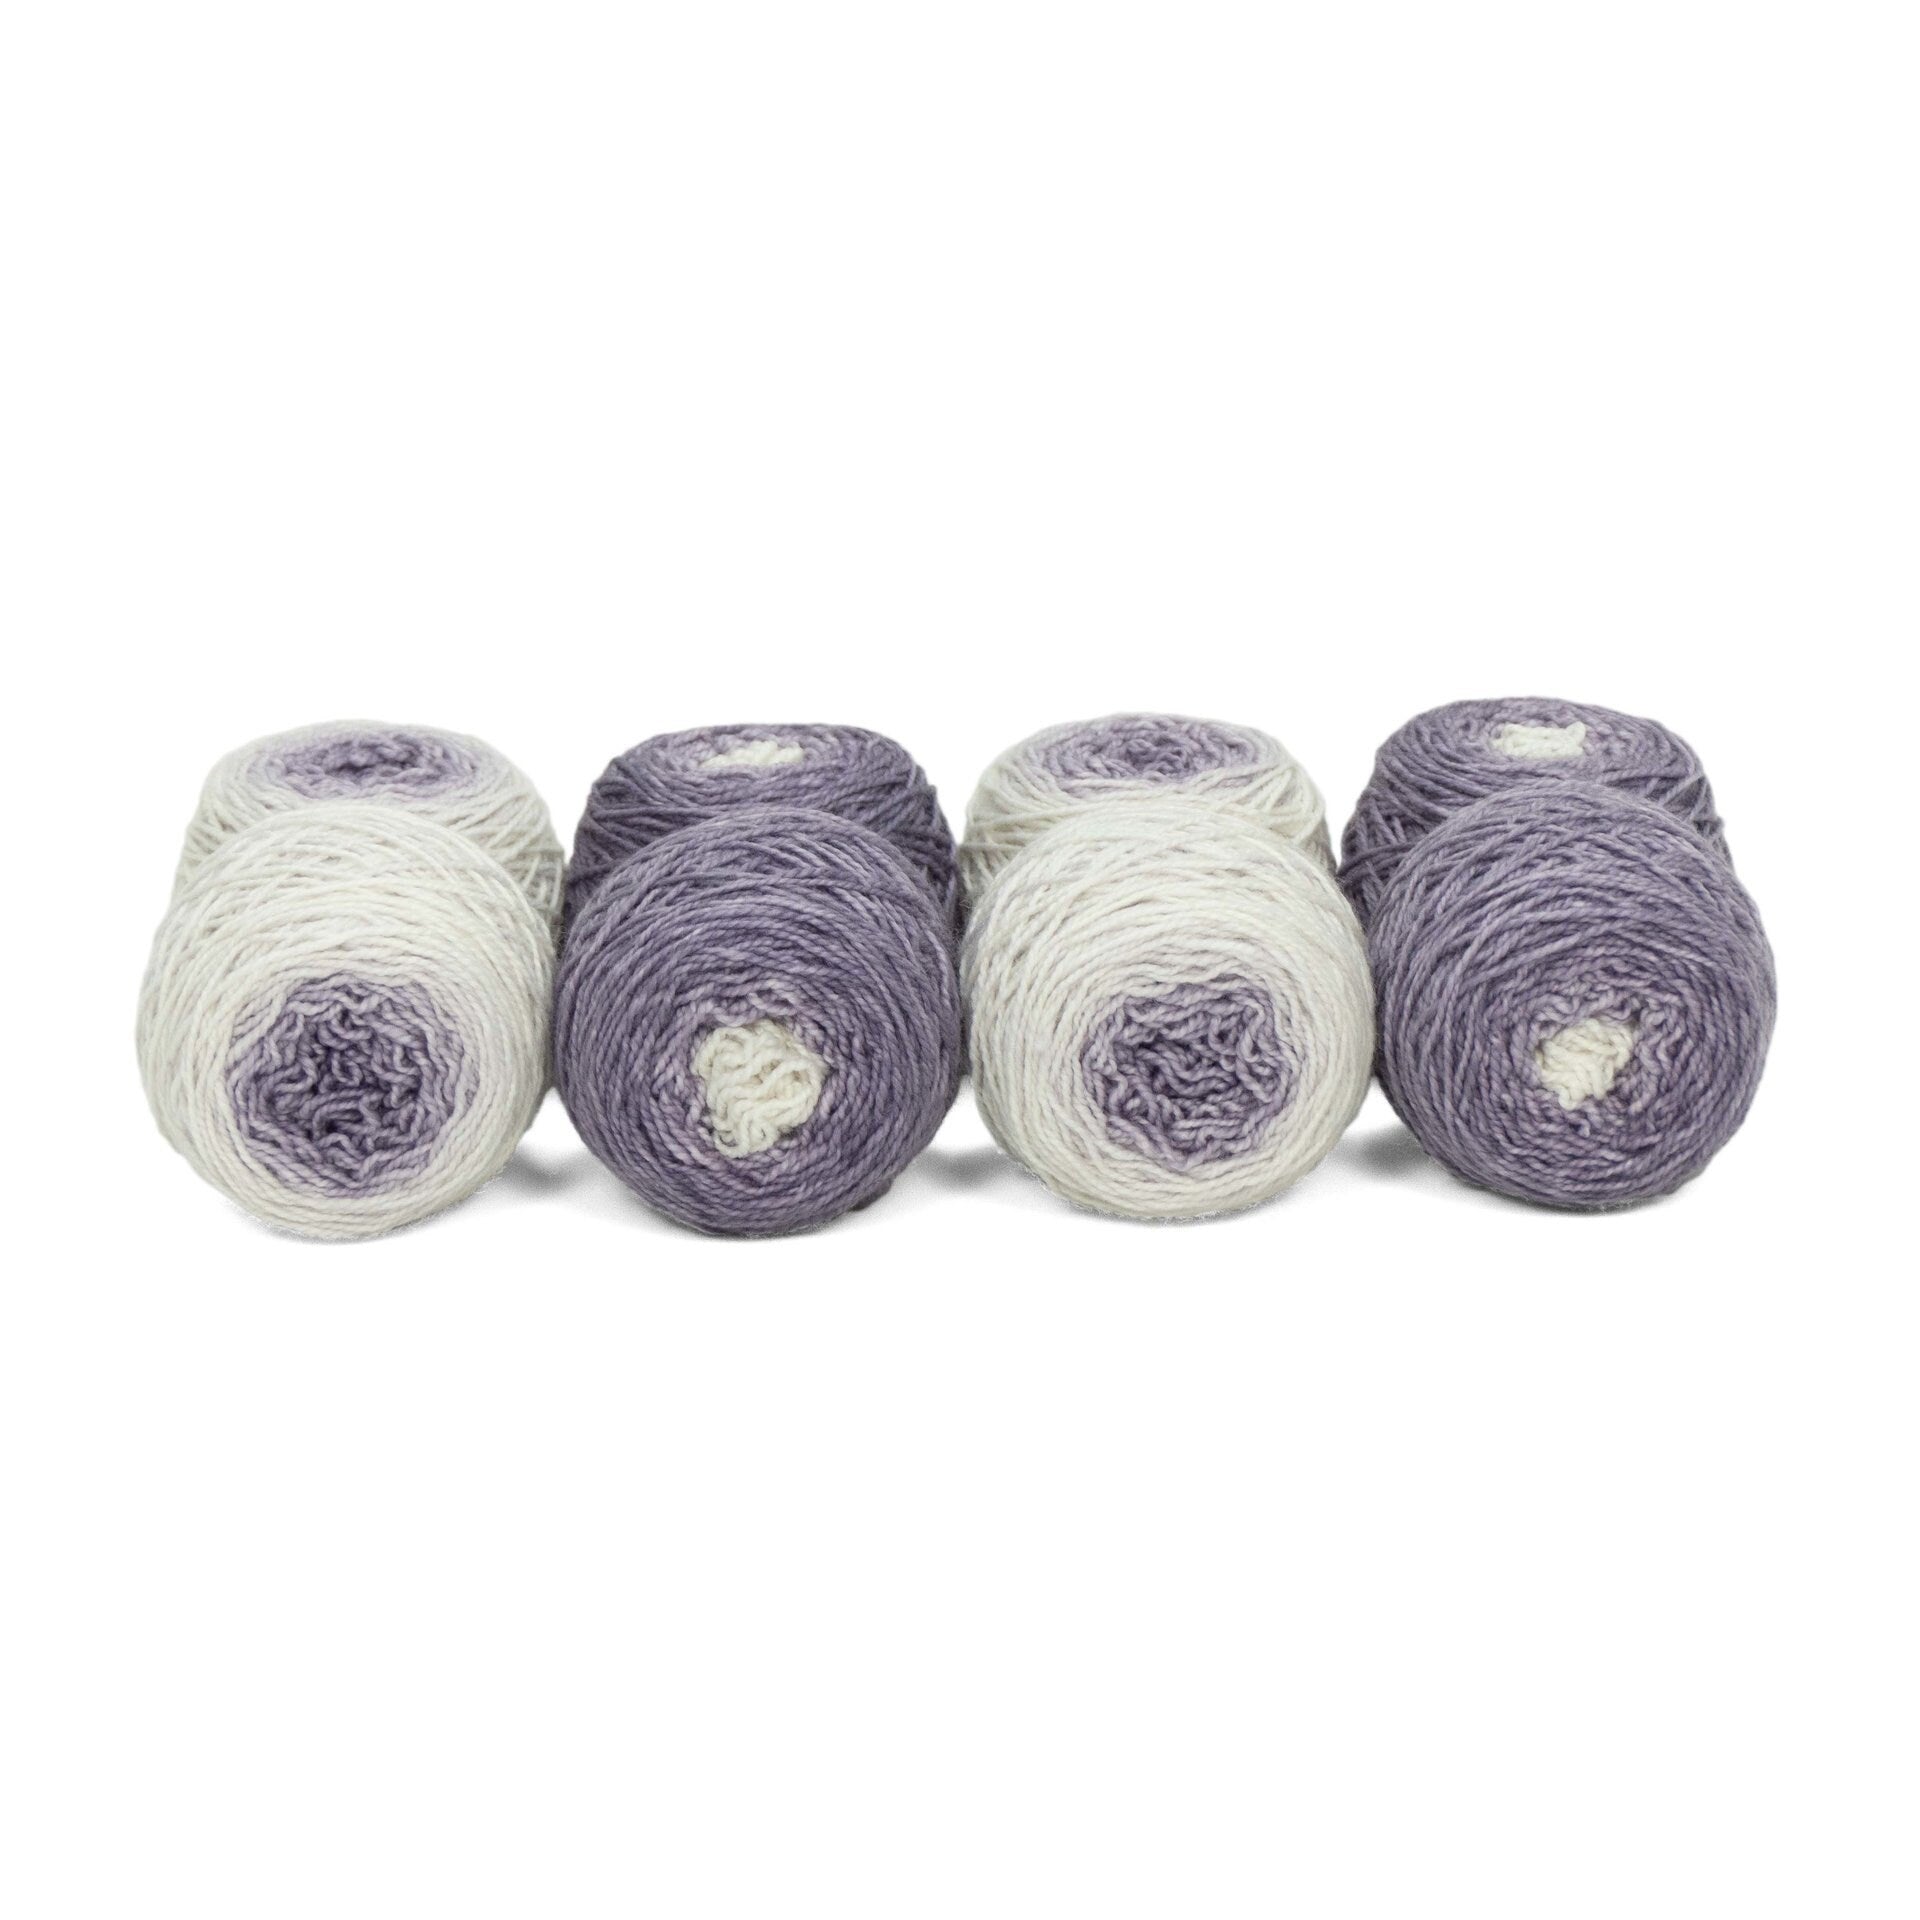 Amethyst - Lleap Shorty Sock Twins - Handpainted Semisolid Gradient Sock Yarn Set